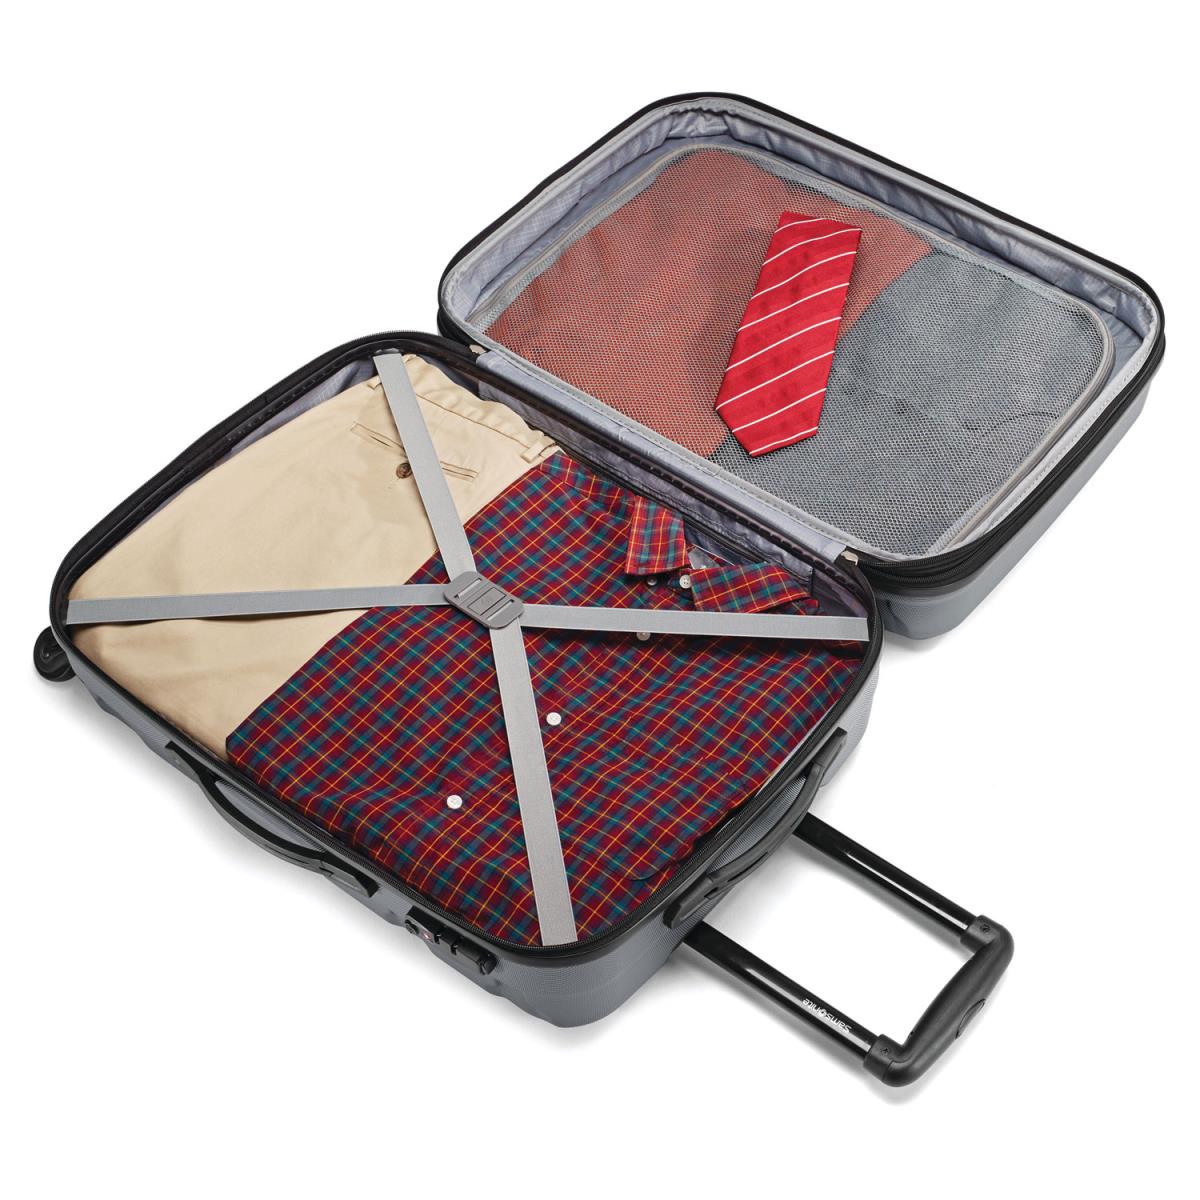 Samsonite Omni Hardside Spinner Suitcase Luggage Charcoal - 20 / 24 / 28